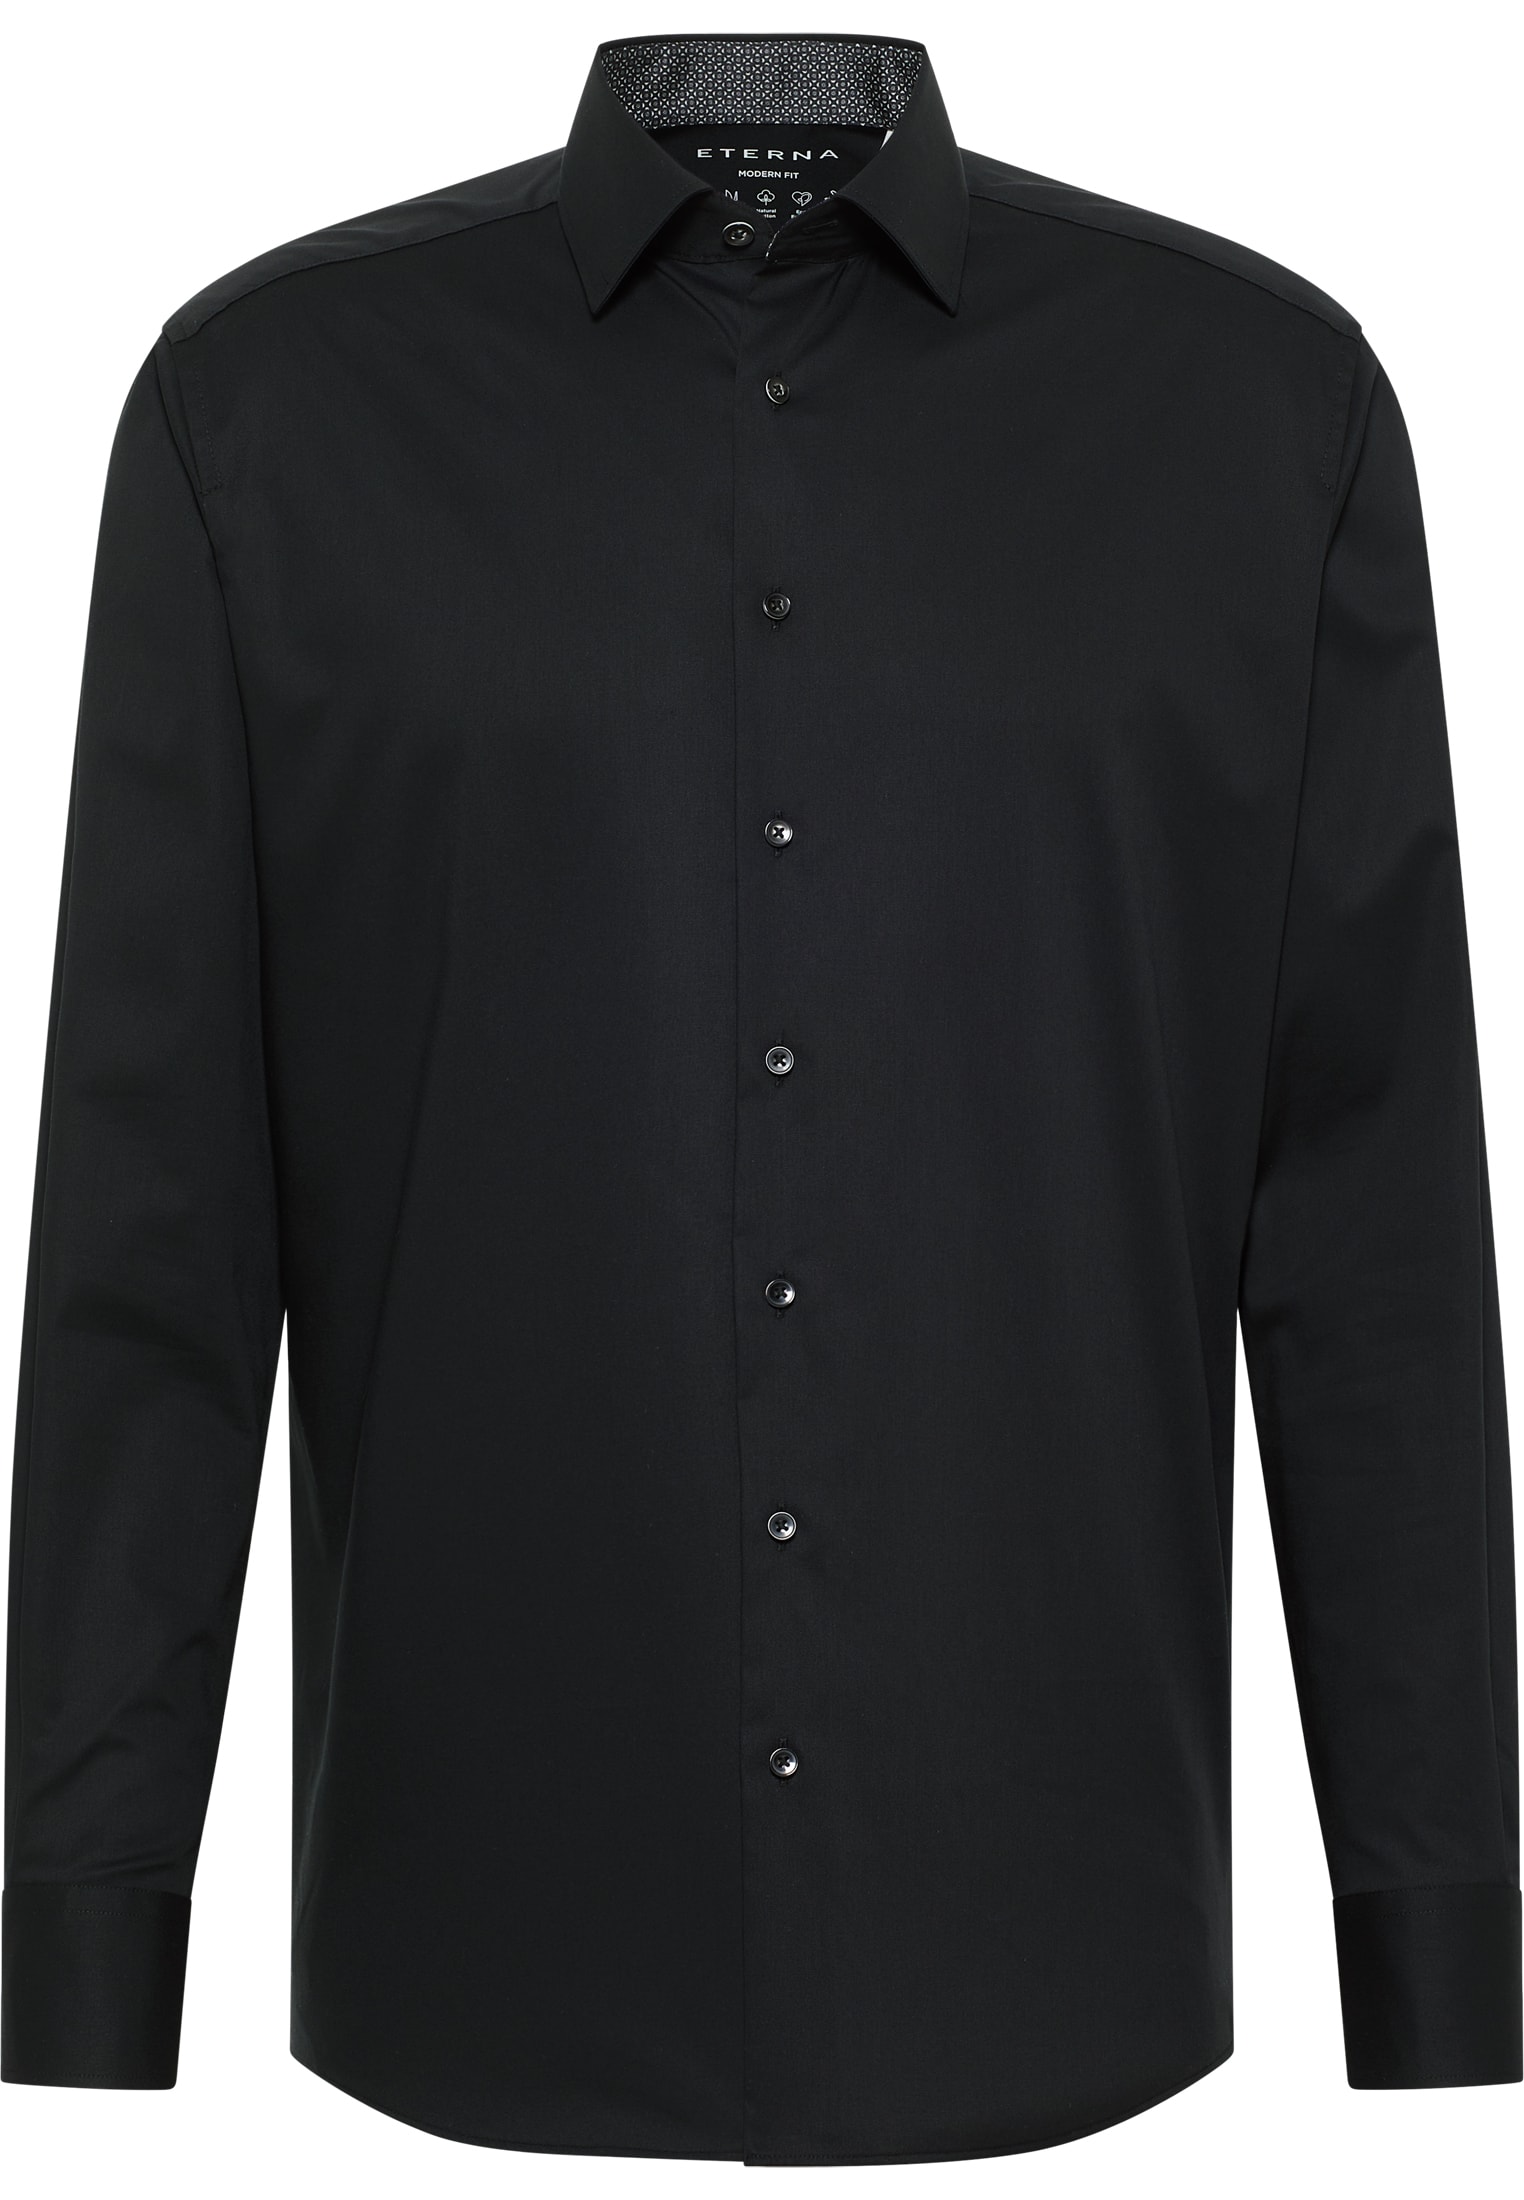 MODERN FIT Performance Shirt in black plain